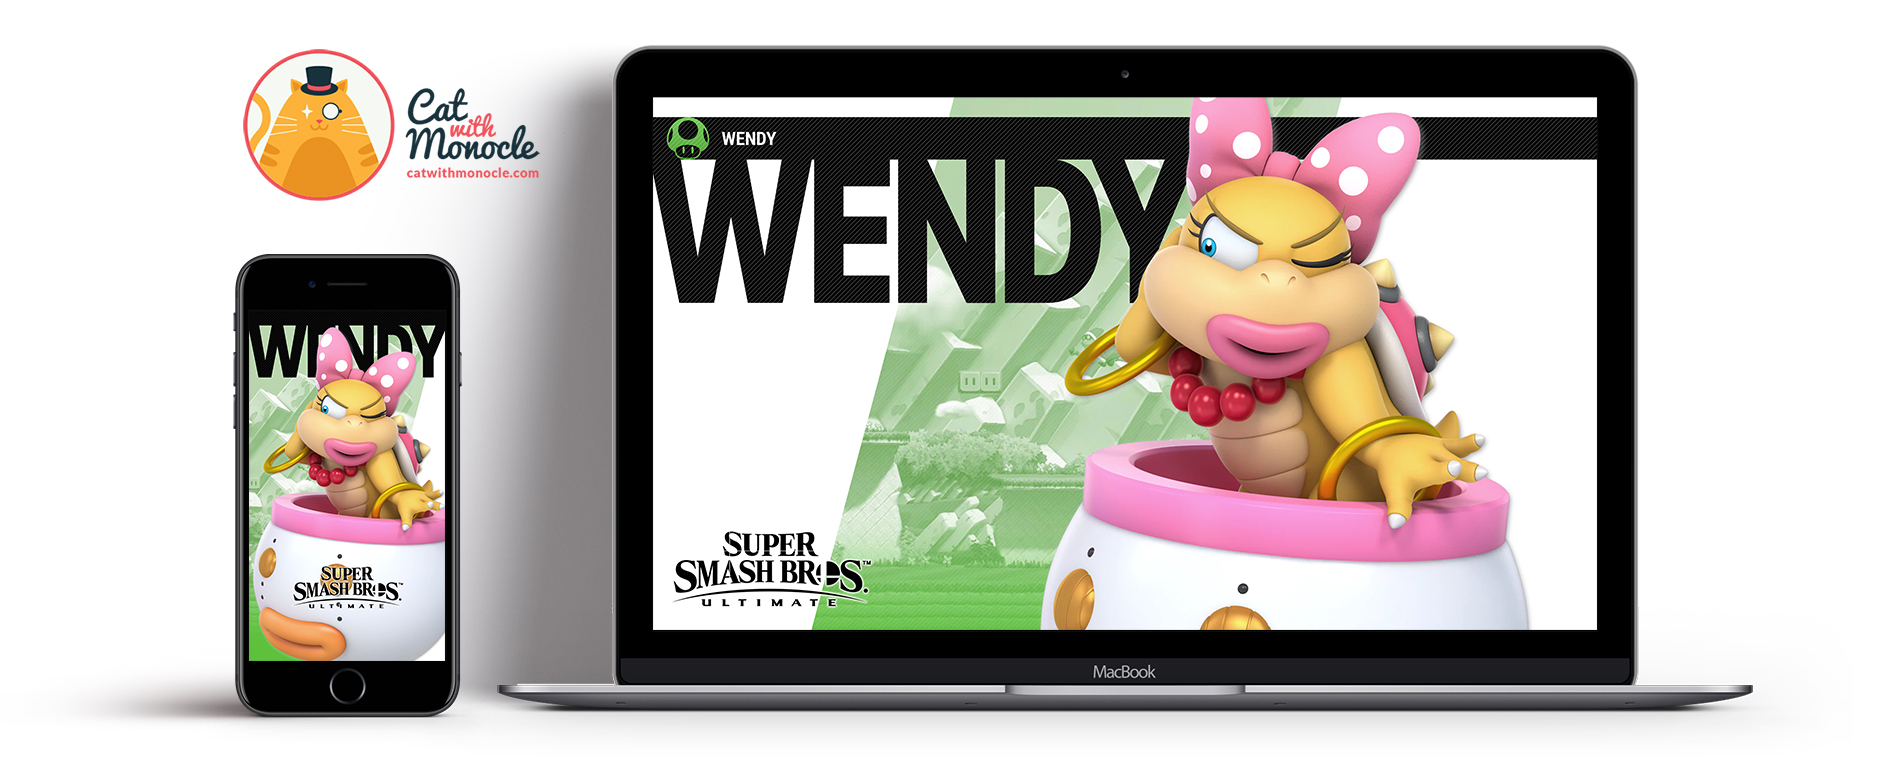 Super Smash Bros Ultimate Wendy